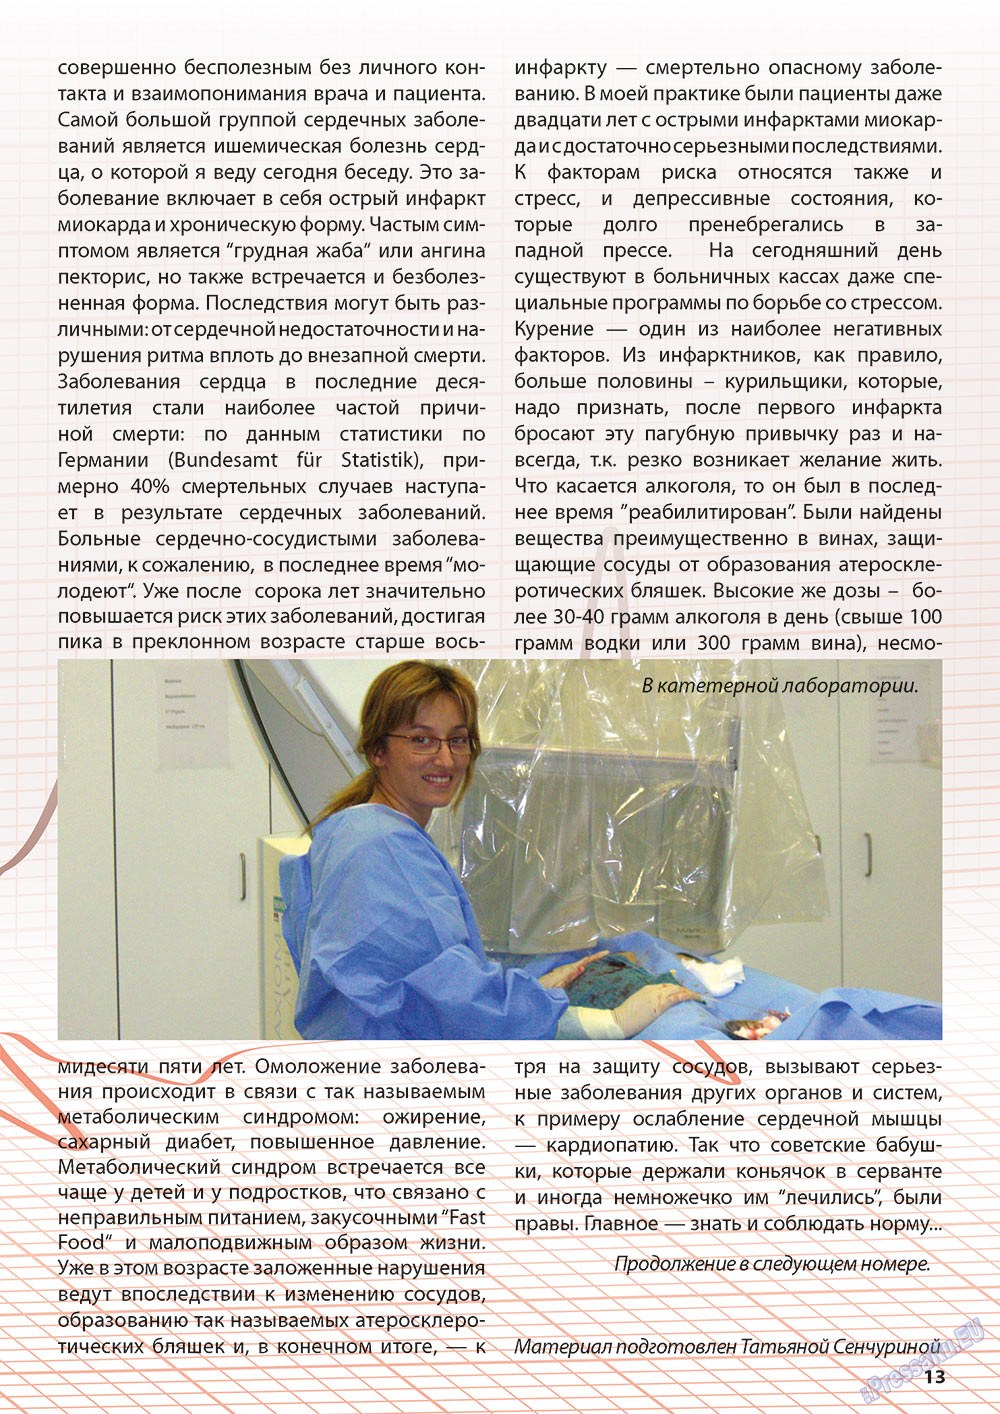 Wadim, журнал. 2012 №5 стр.13